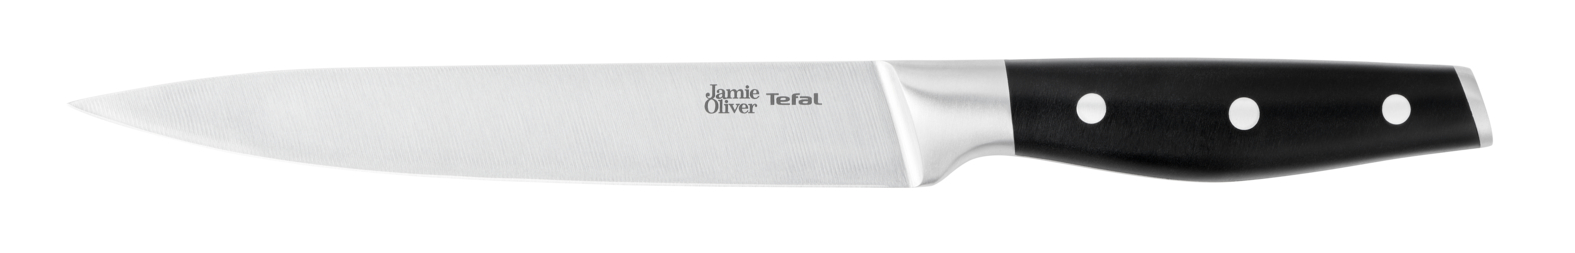 Универсальный нож Jamie Oliver 20 cм K2670244 нож сантоку jamie oliver k2671556 16 5 см